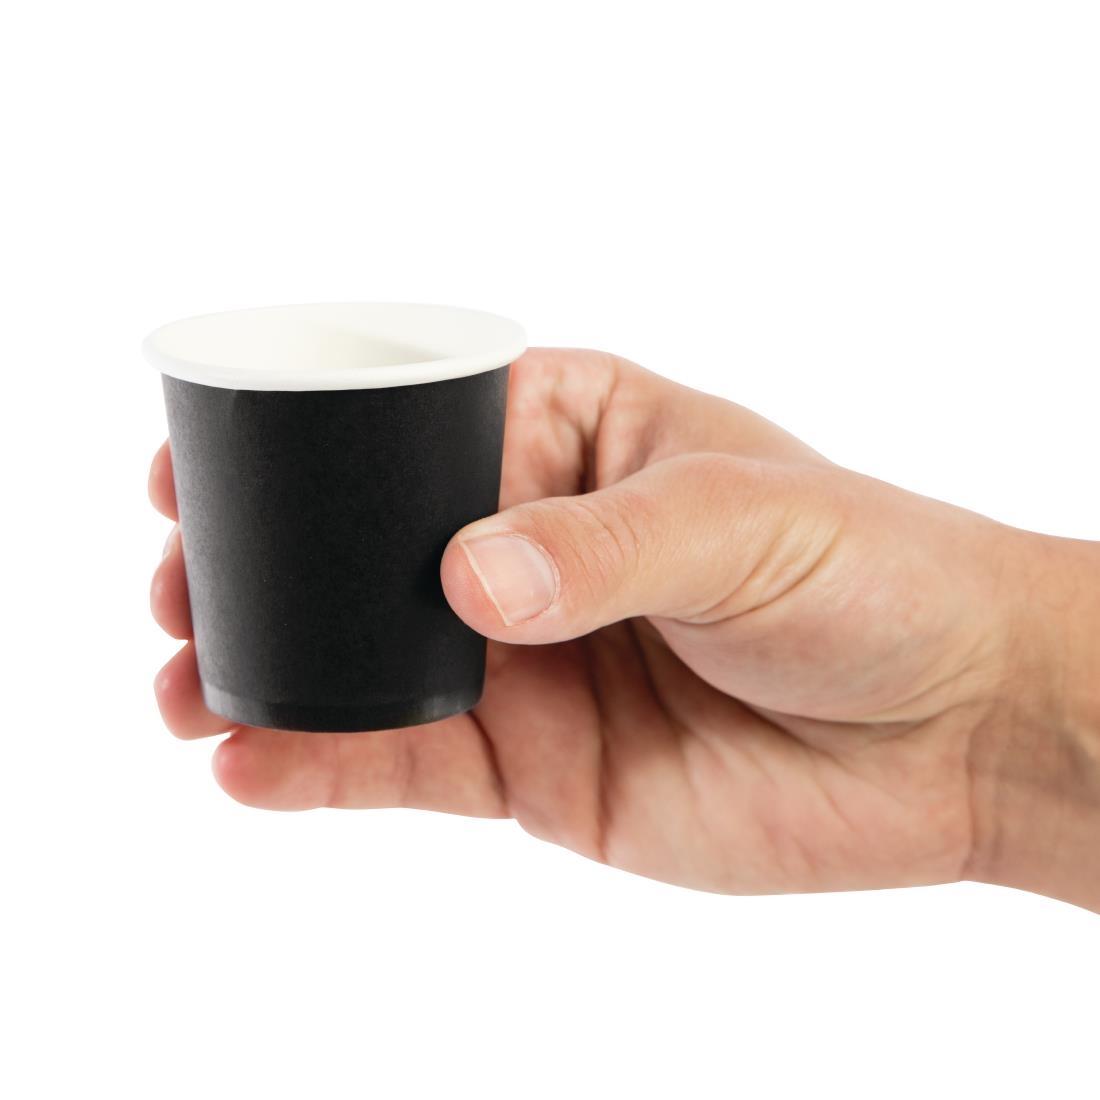 Fiesta Recyclable Espresso Cups Single Wall Black 112ml / 4oz (Pack of 50) - GF019  - 5